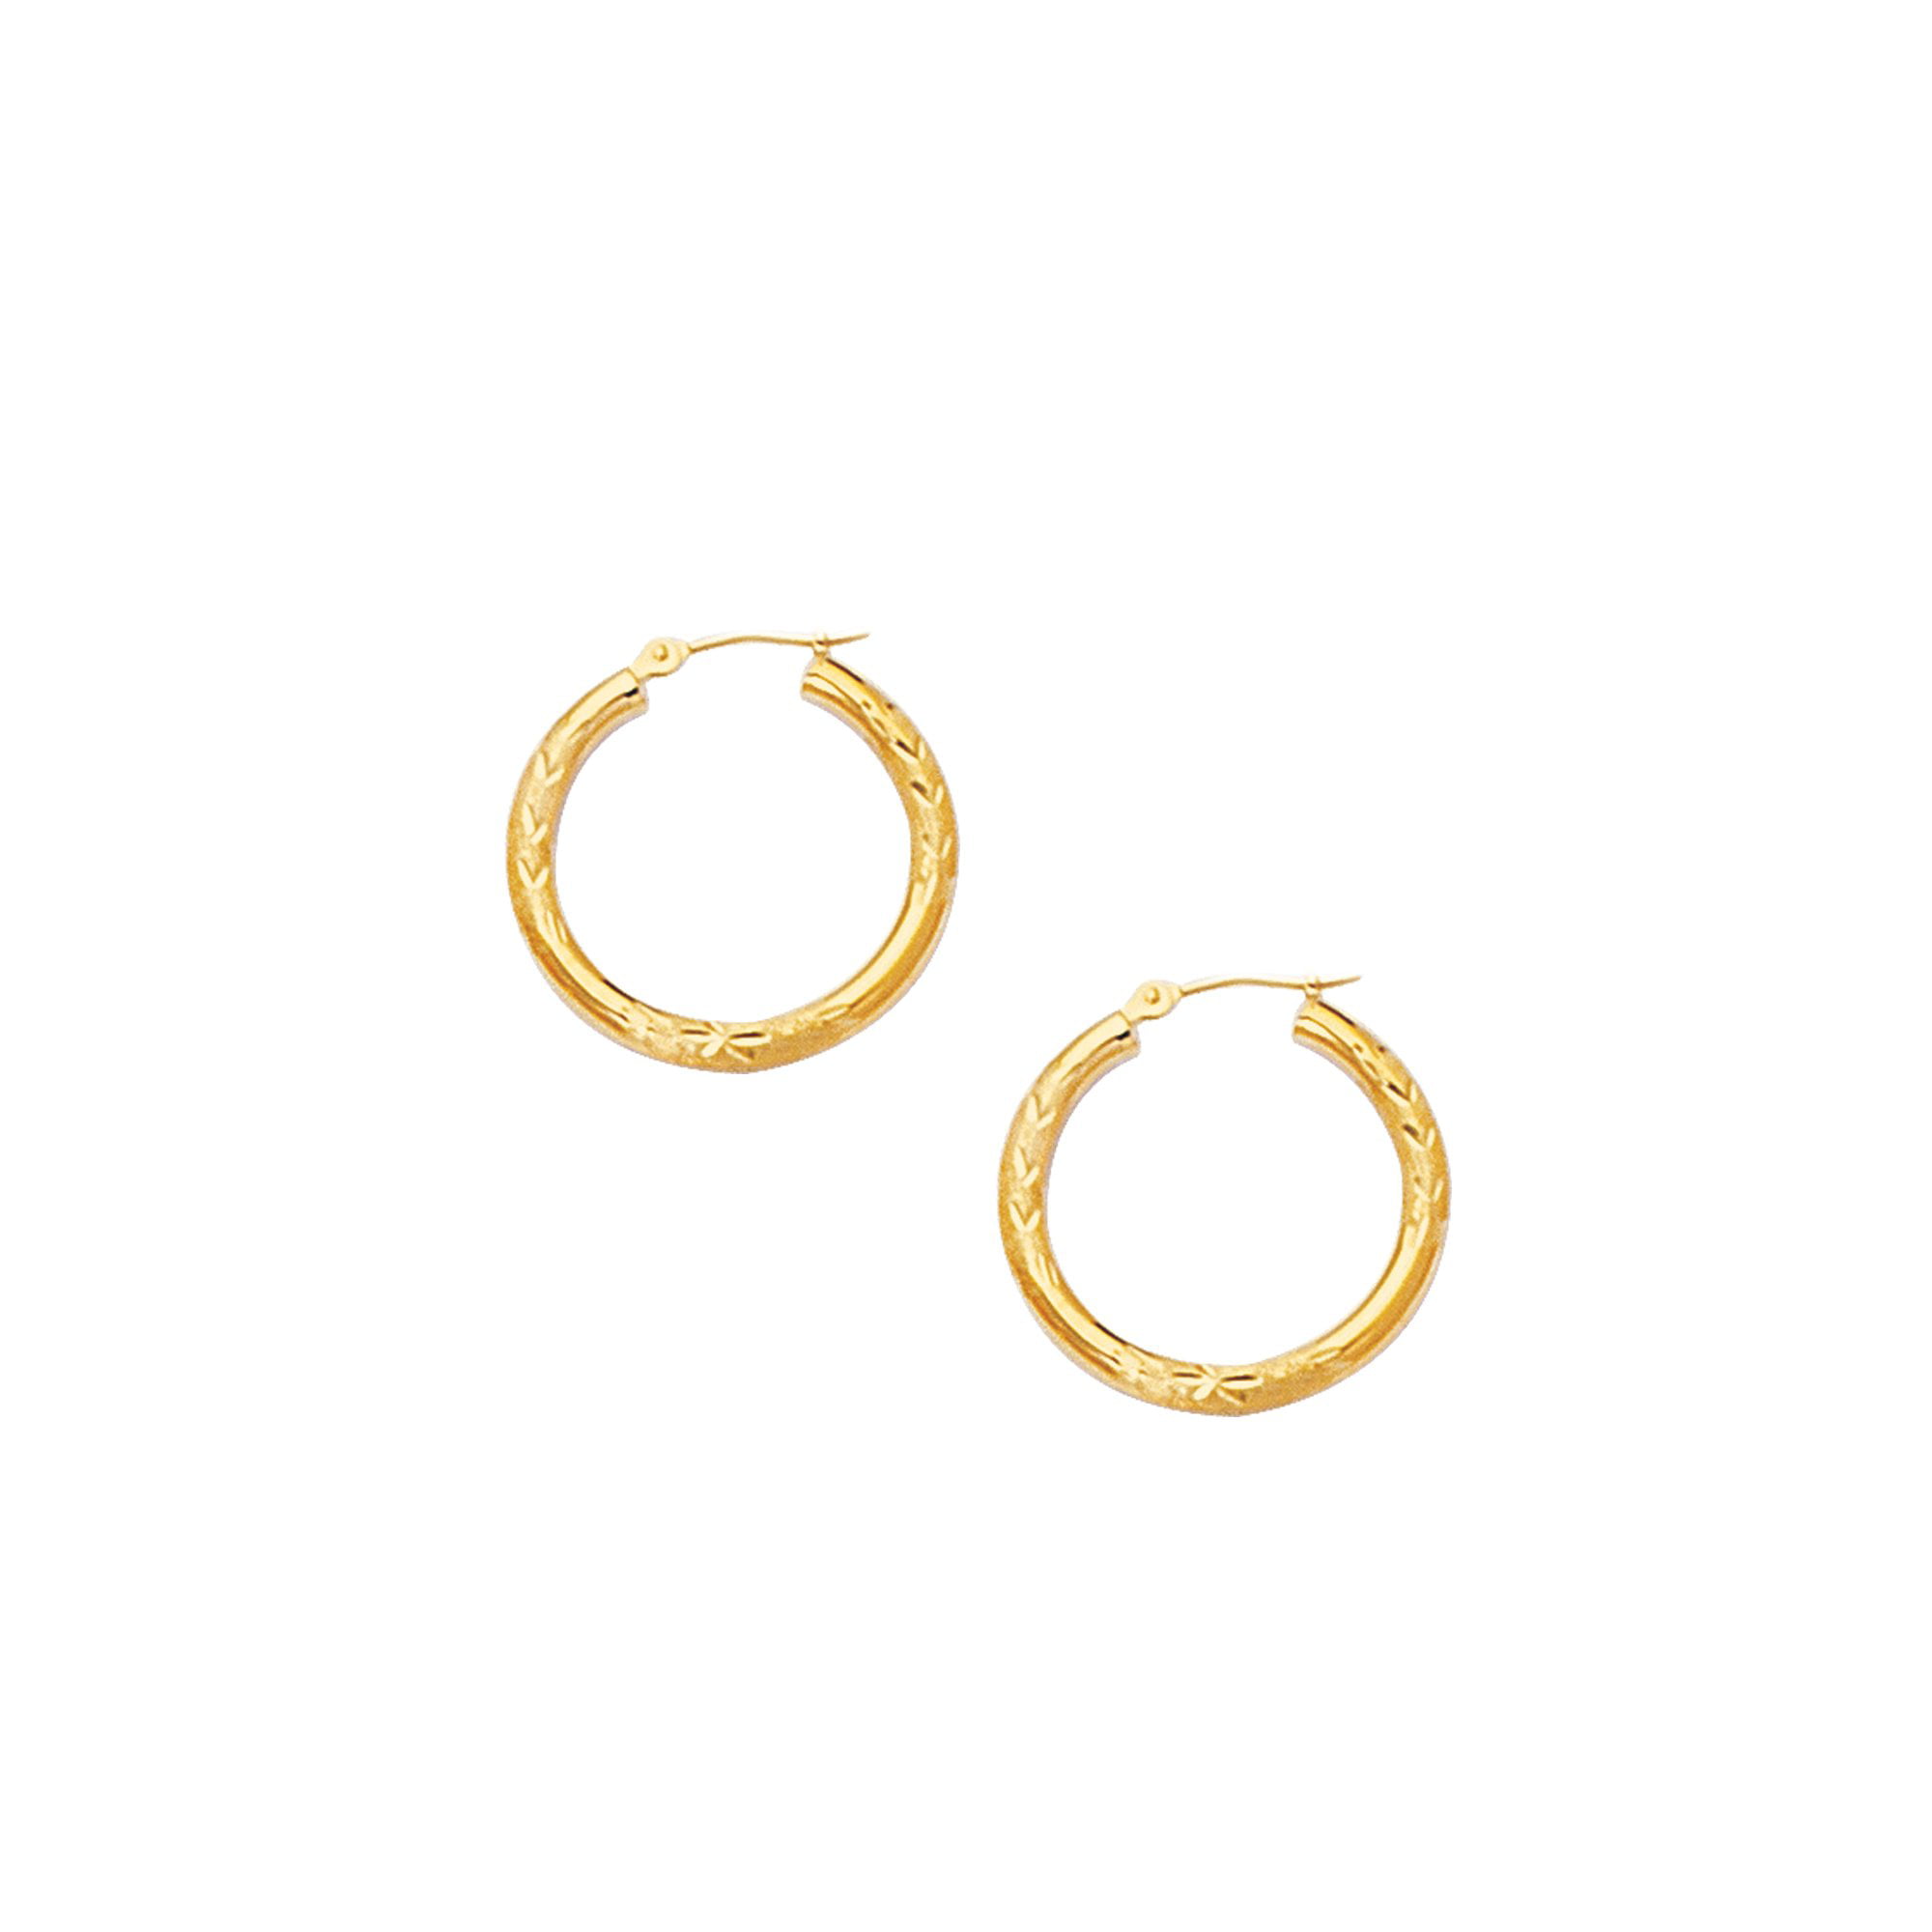 FB Jewels 10K Yellow Gold Diamond-cut 3x20mm Hollow Tube Hoop Earrings 